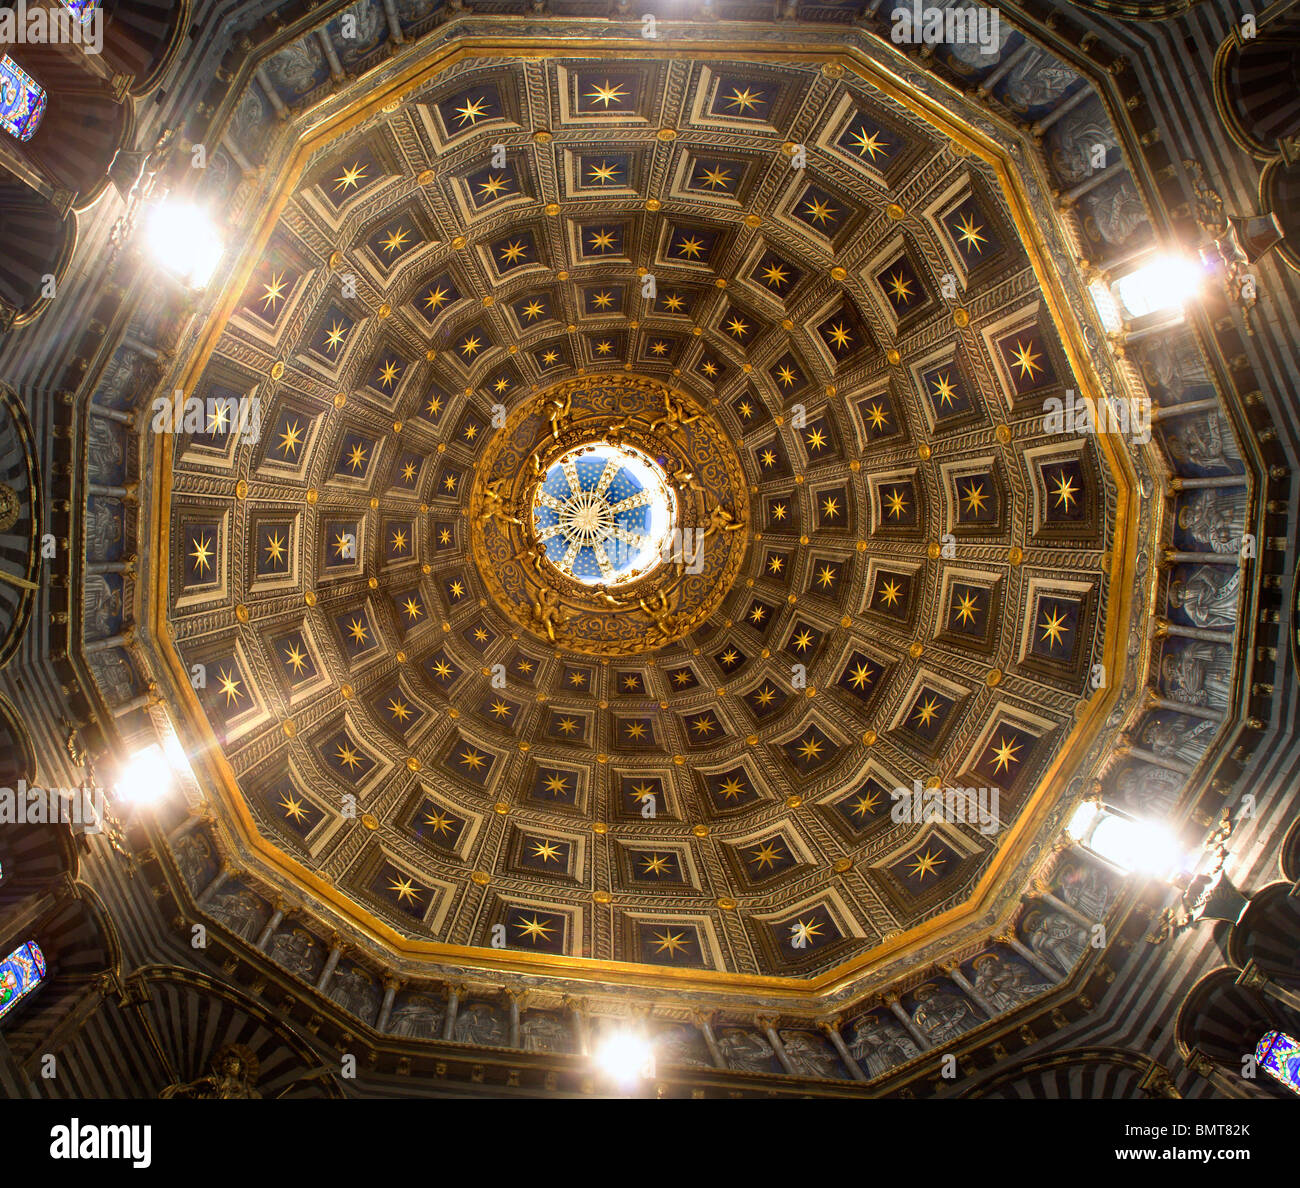 Siena - cupola of cathedral Santa Maria Assunta - interior Stock Photo